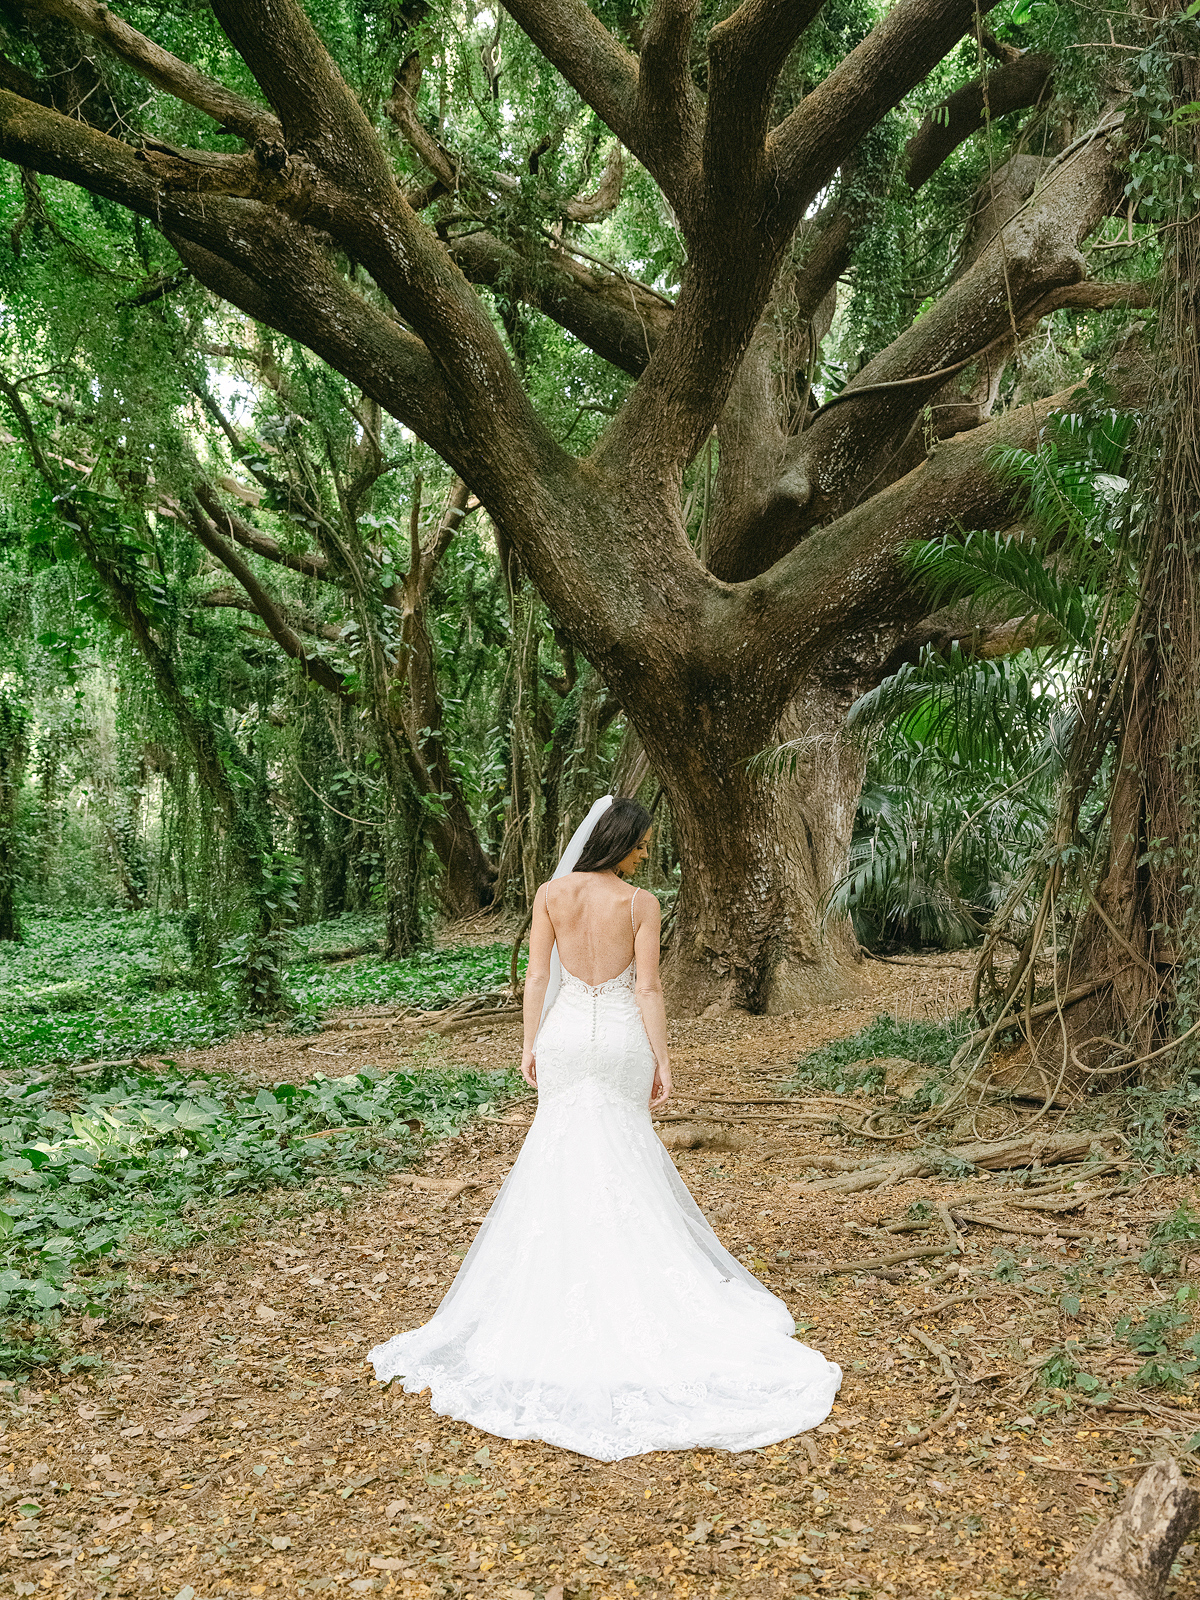 Hawaii wedding photography by Laura Ivanova